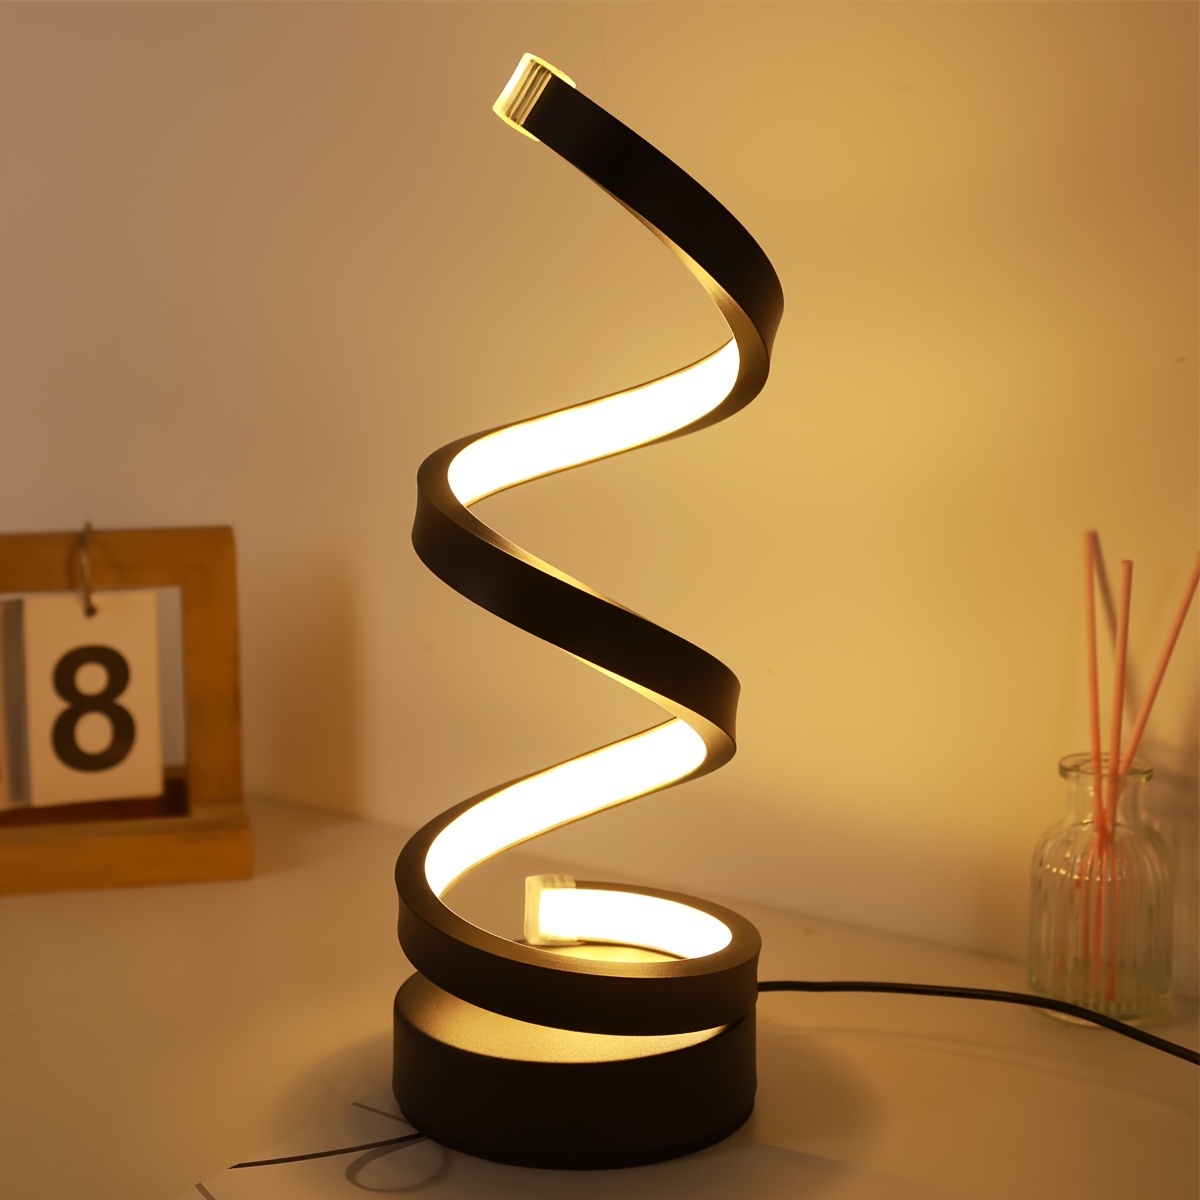 

1pc Modern Minimalist Spiral Patterned Desk Lamp With 3 Color Changes, Suitable For Creative Decoration, Atmosphere Lighting, Night Light In Living Room, Bedroom, Dining Room, Bedside, Etc